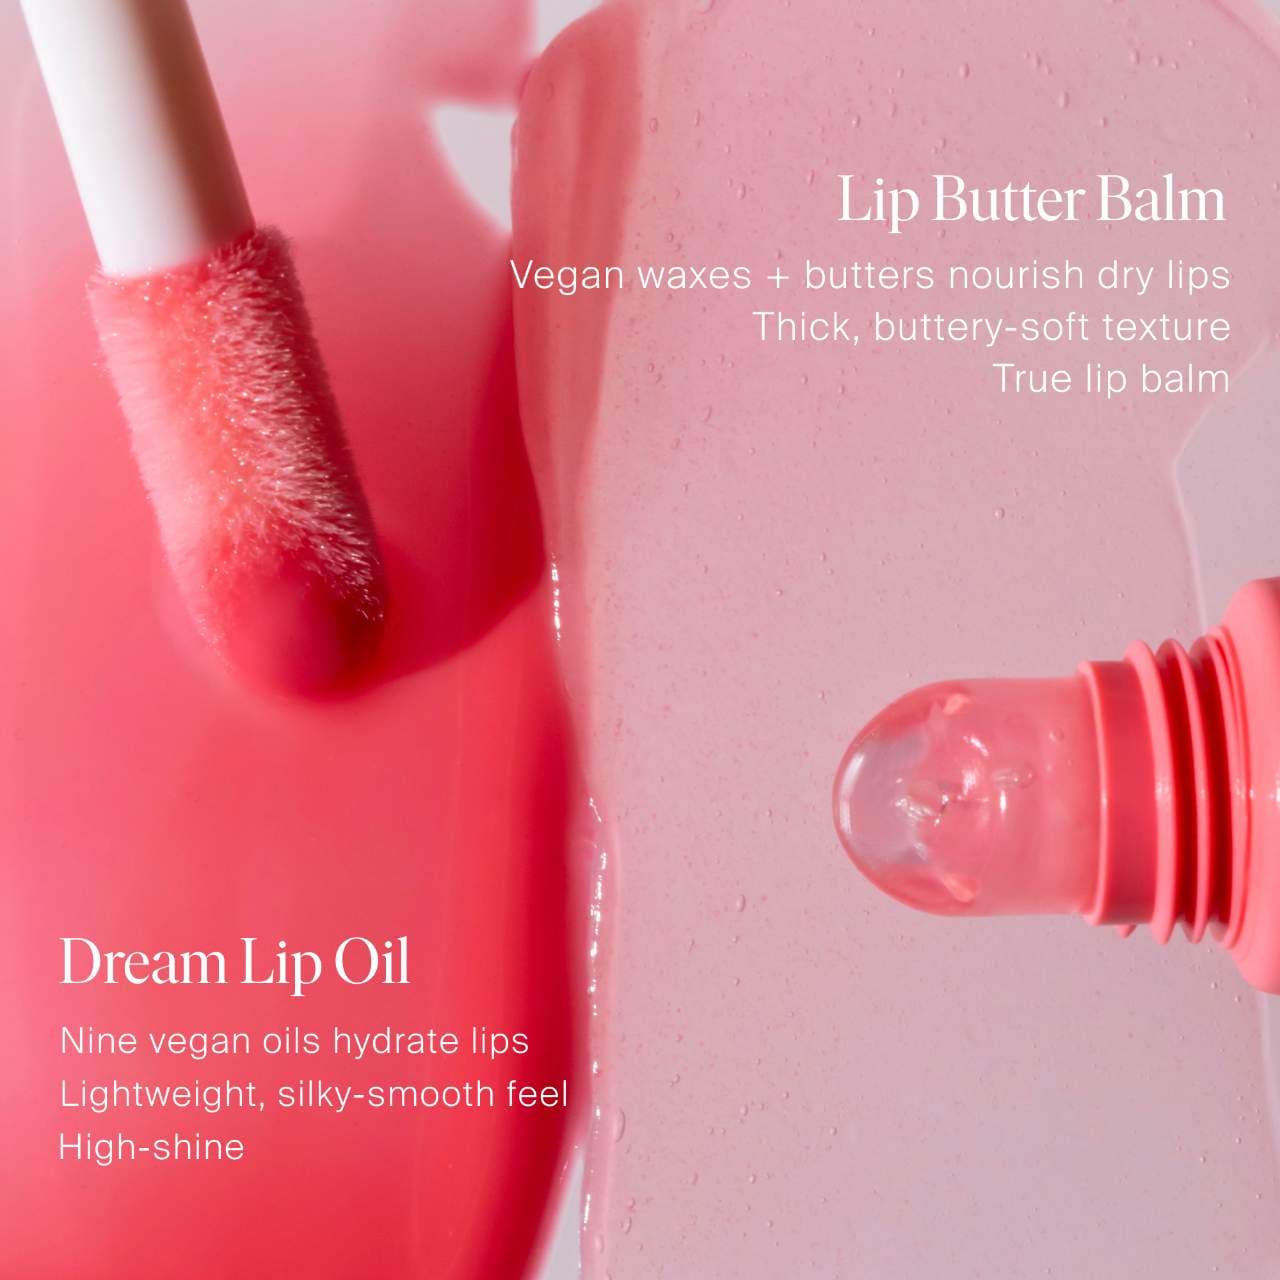 Summer Fridays | Dream Lip Oil for Moisturizing Sheer Coverage | Blush Dreams